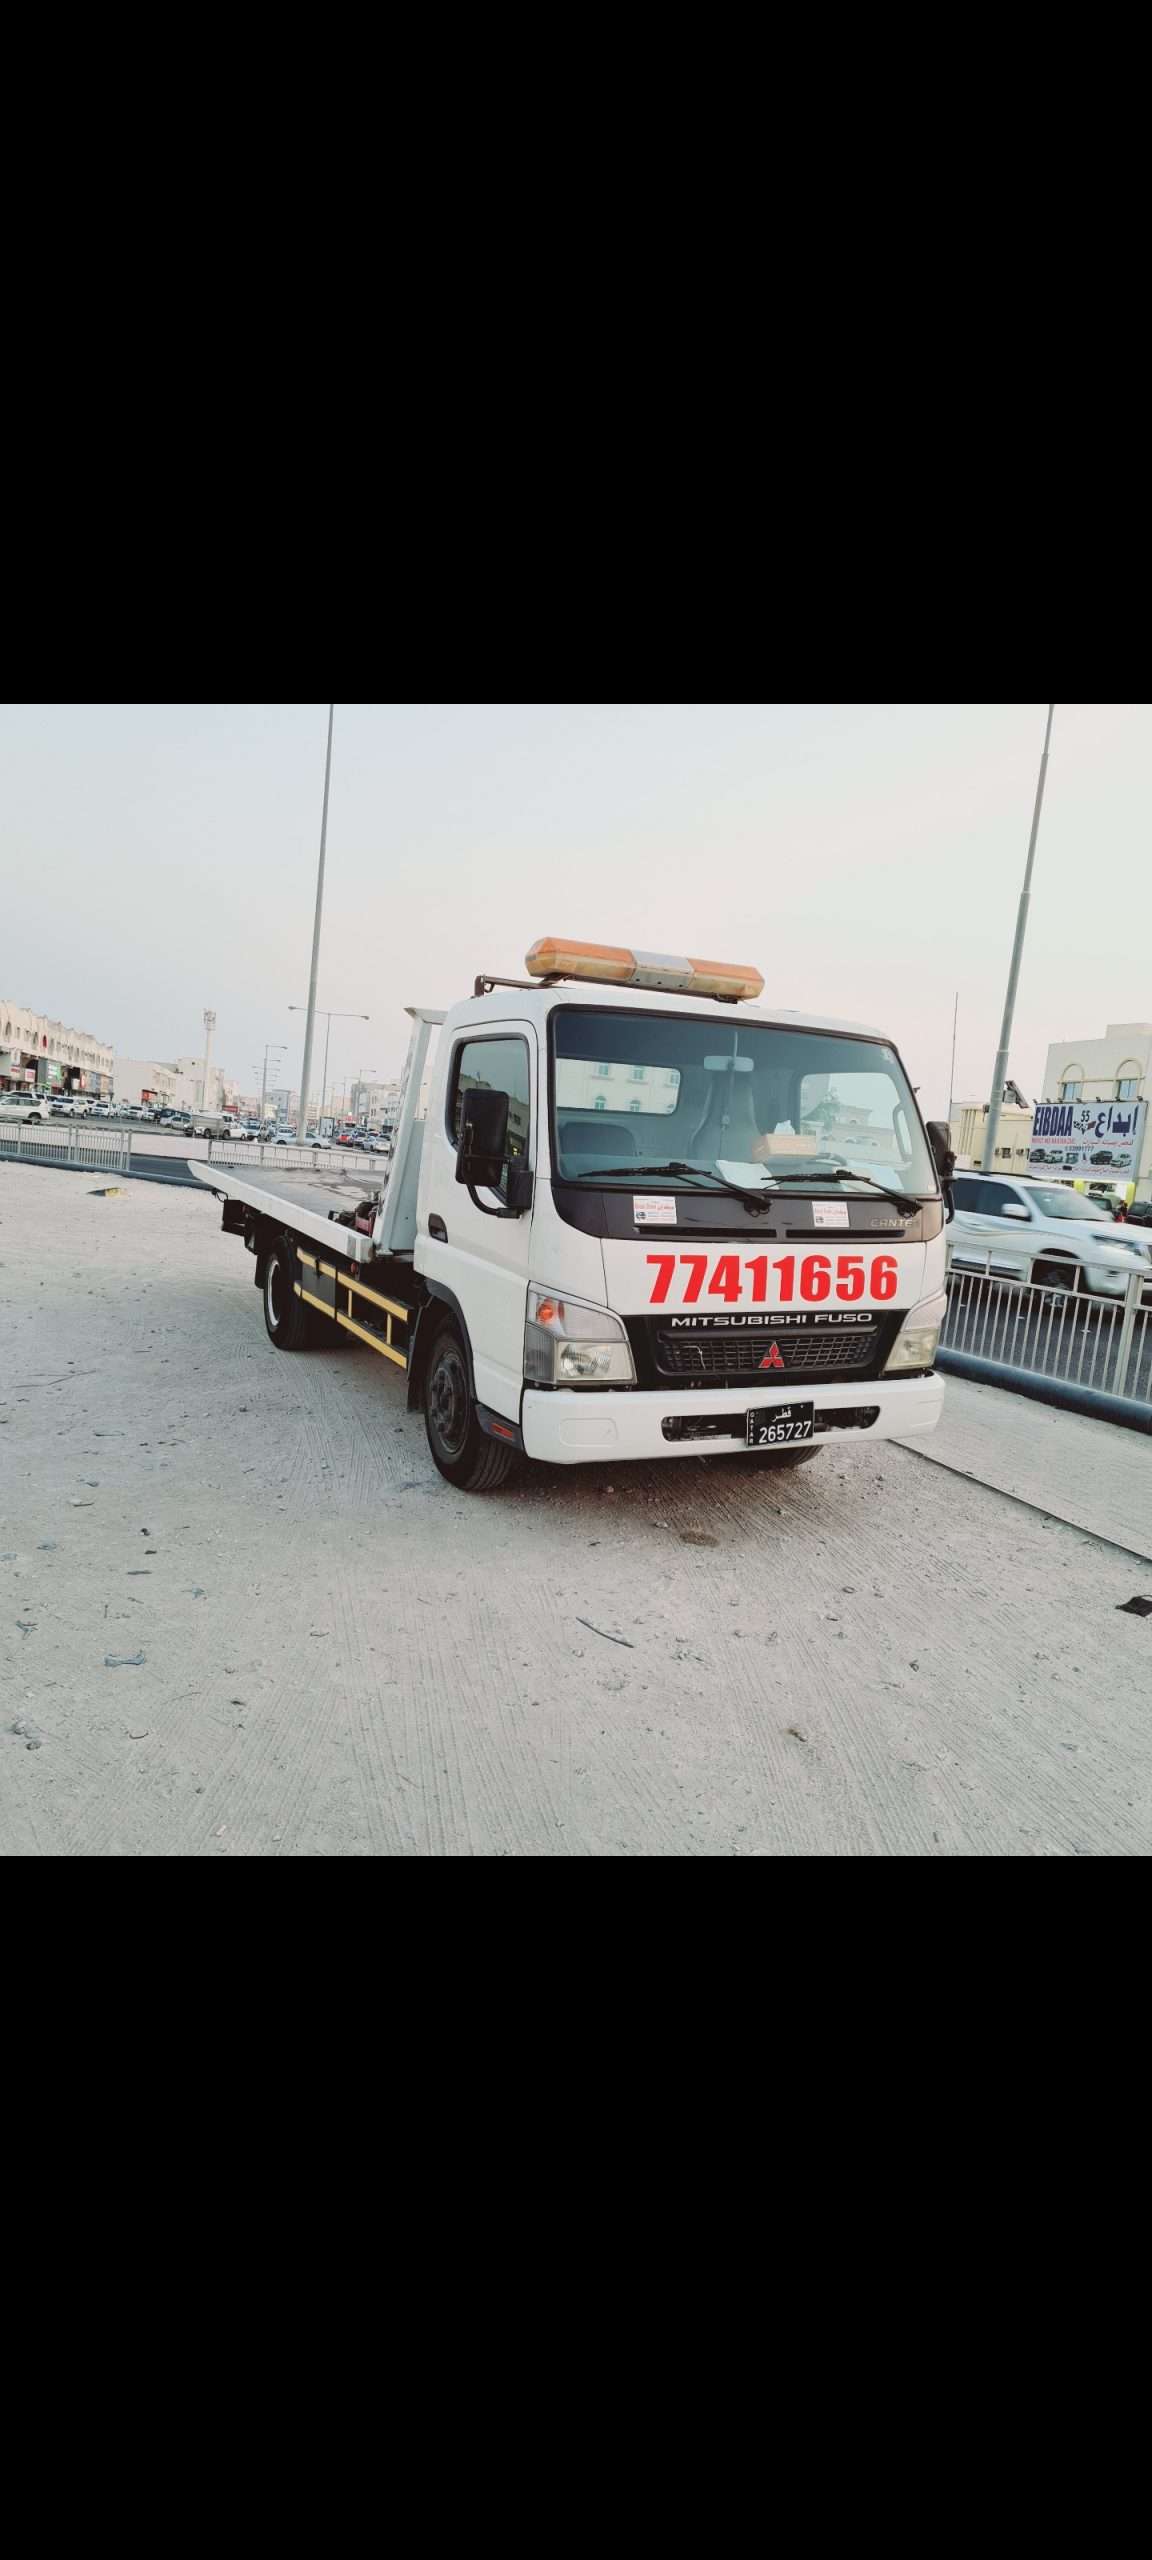 Tow Truck Recovery Breakdown Mesaieed Sealine qatar towing 77411656